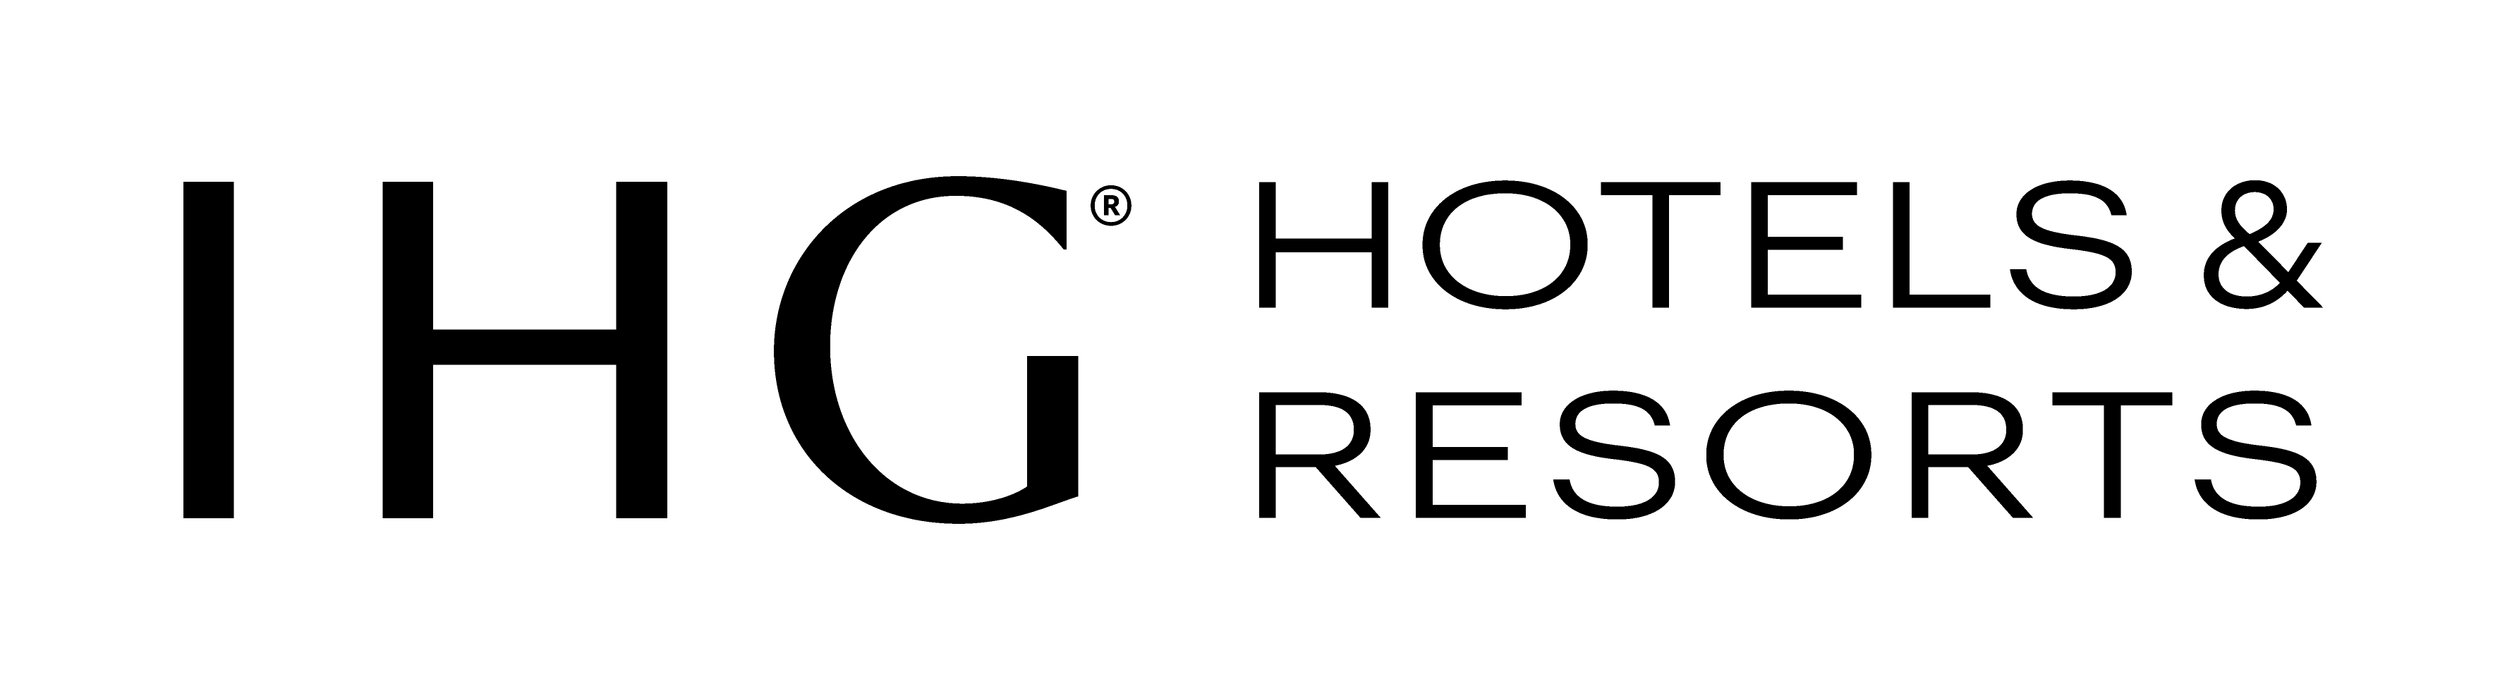 IHG_Secondary_Horizontal_Logo_Black_RGB.png